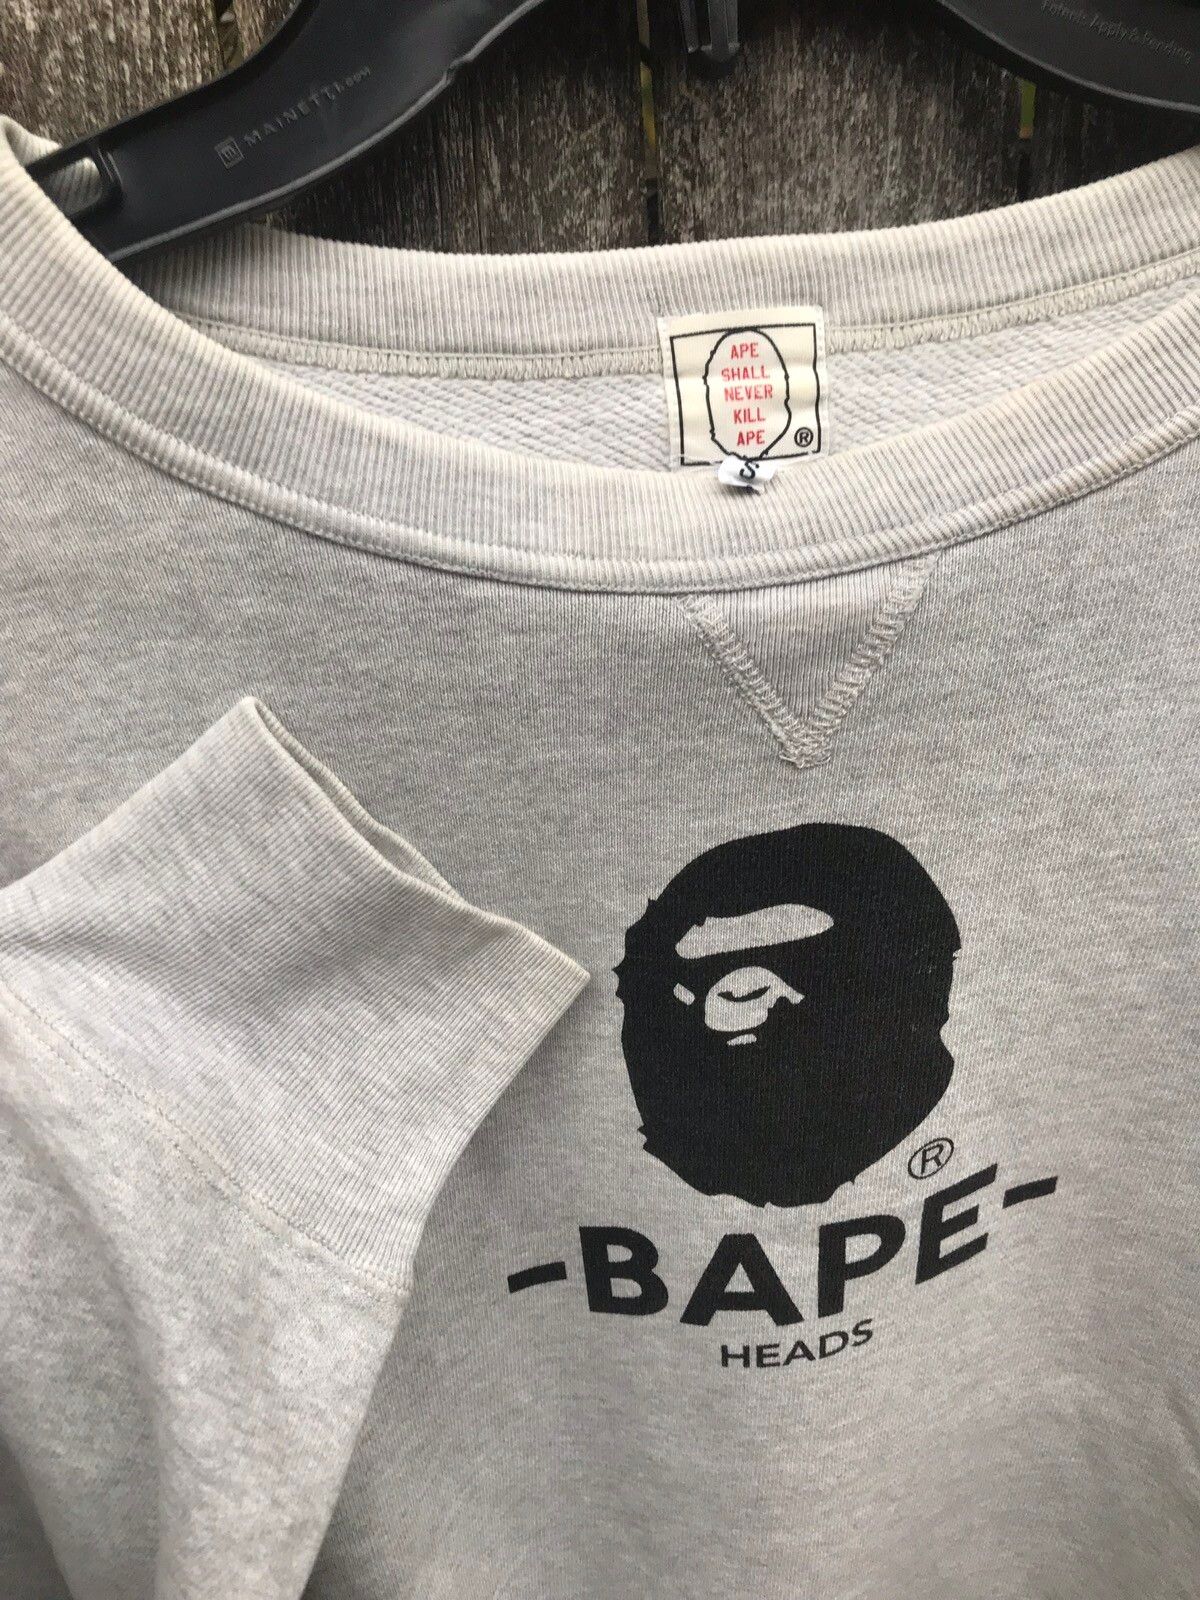 Bape Rare 2002 OG Bape Heads Crewneck Sweatshirt y2k vintage Size US S / EU 44-46 / 1 - 1 Preview